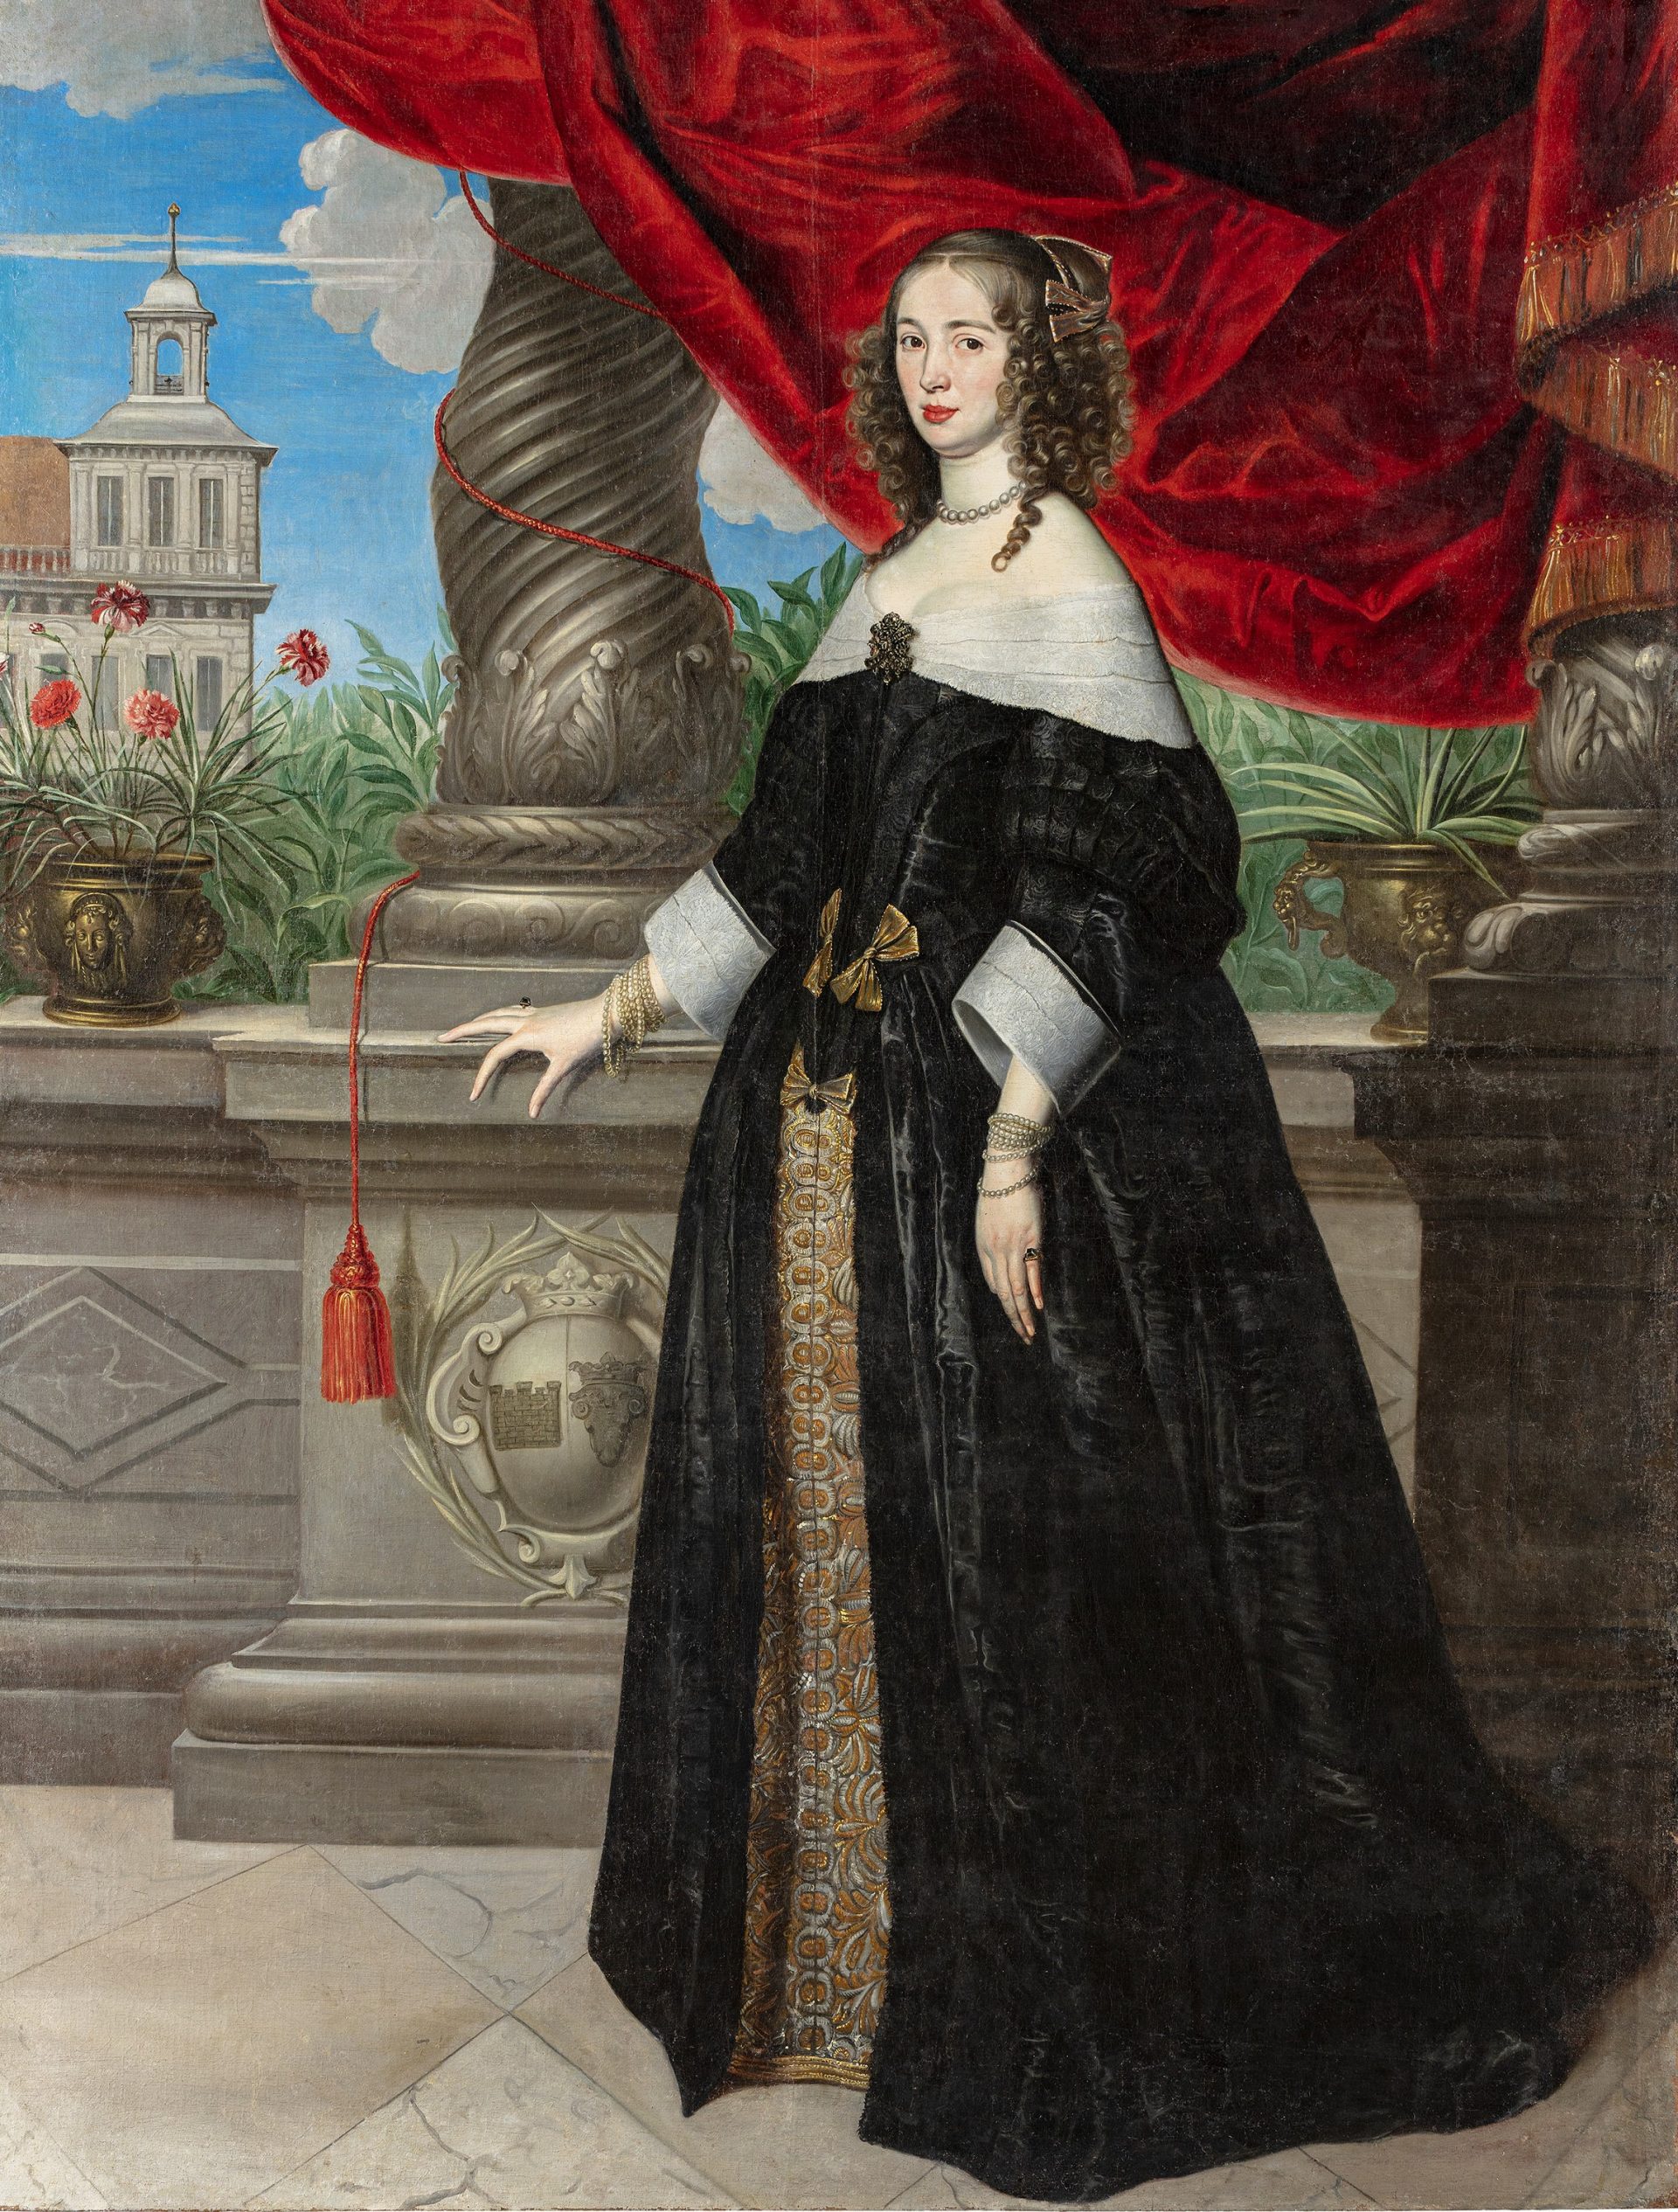 Portrait of Anna Margareta wearing a floor-length black dress.